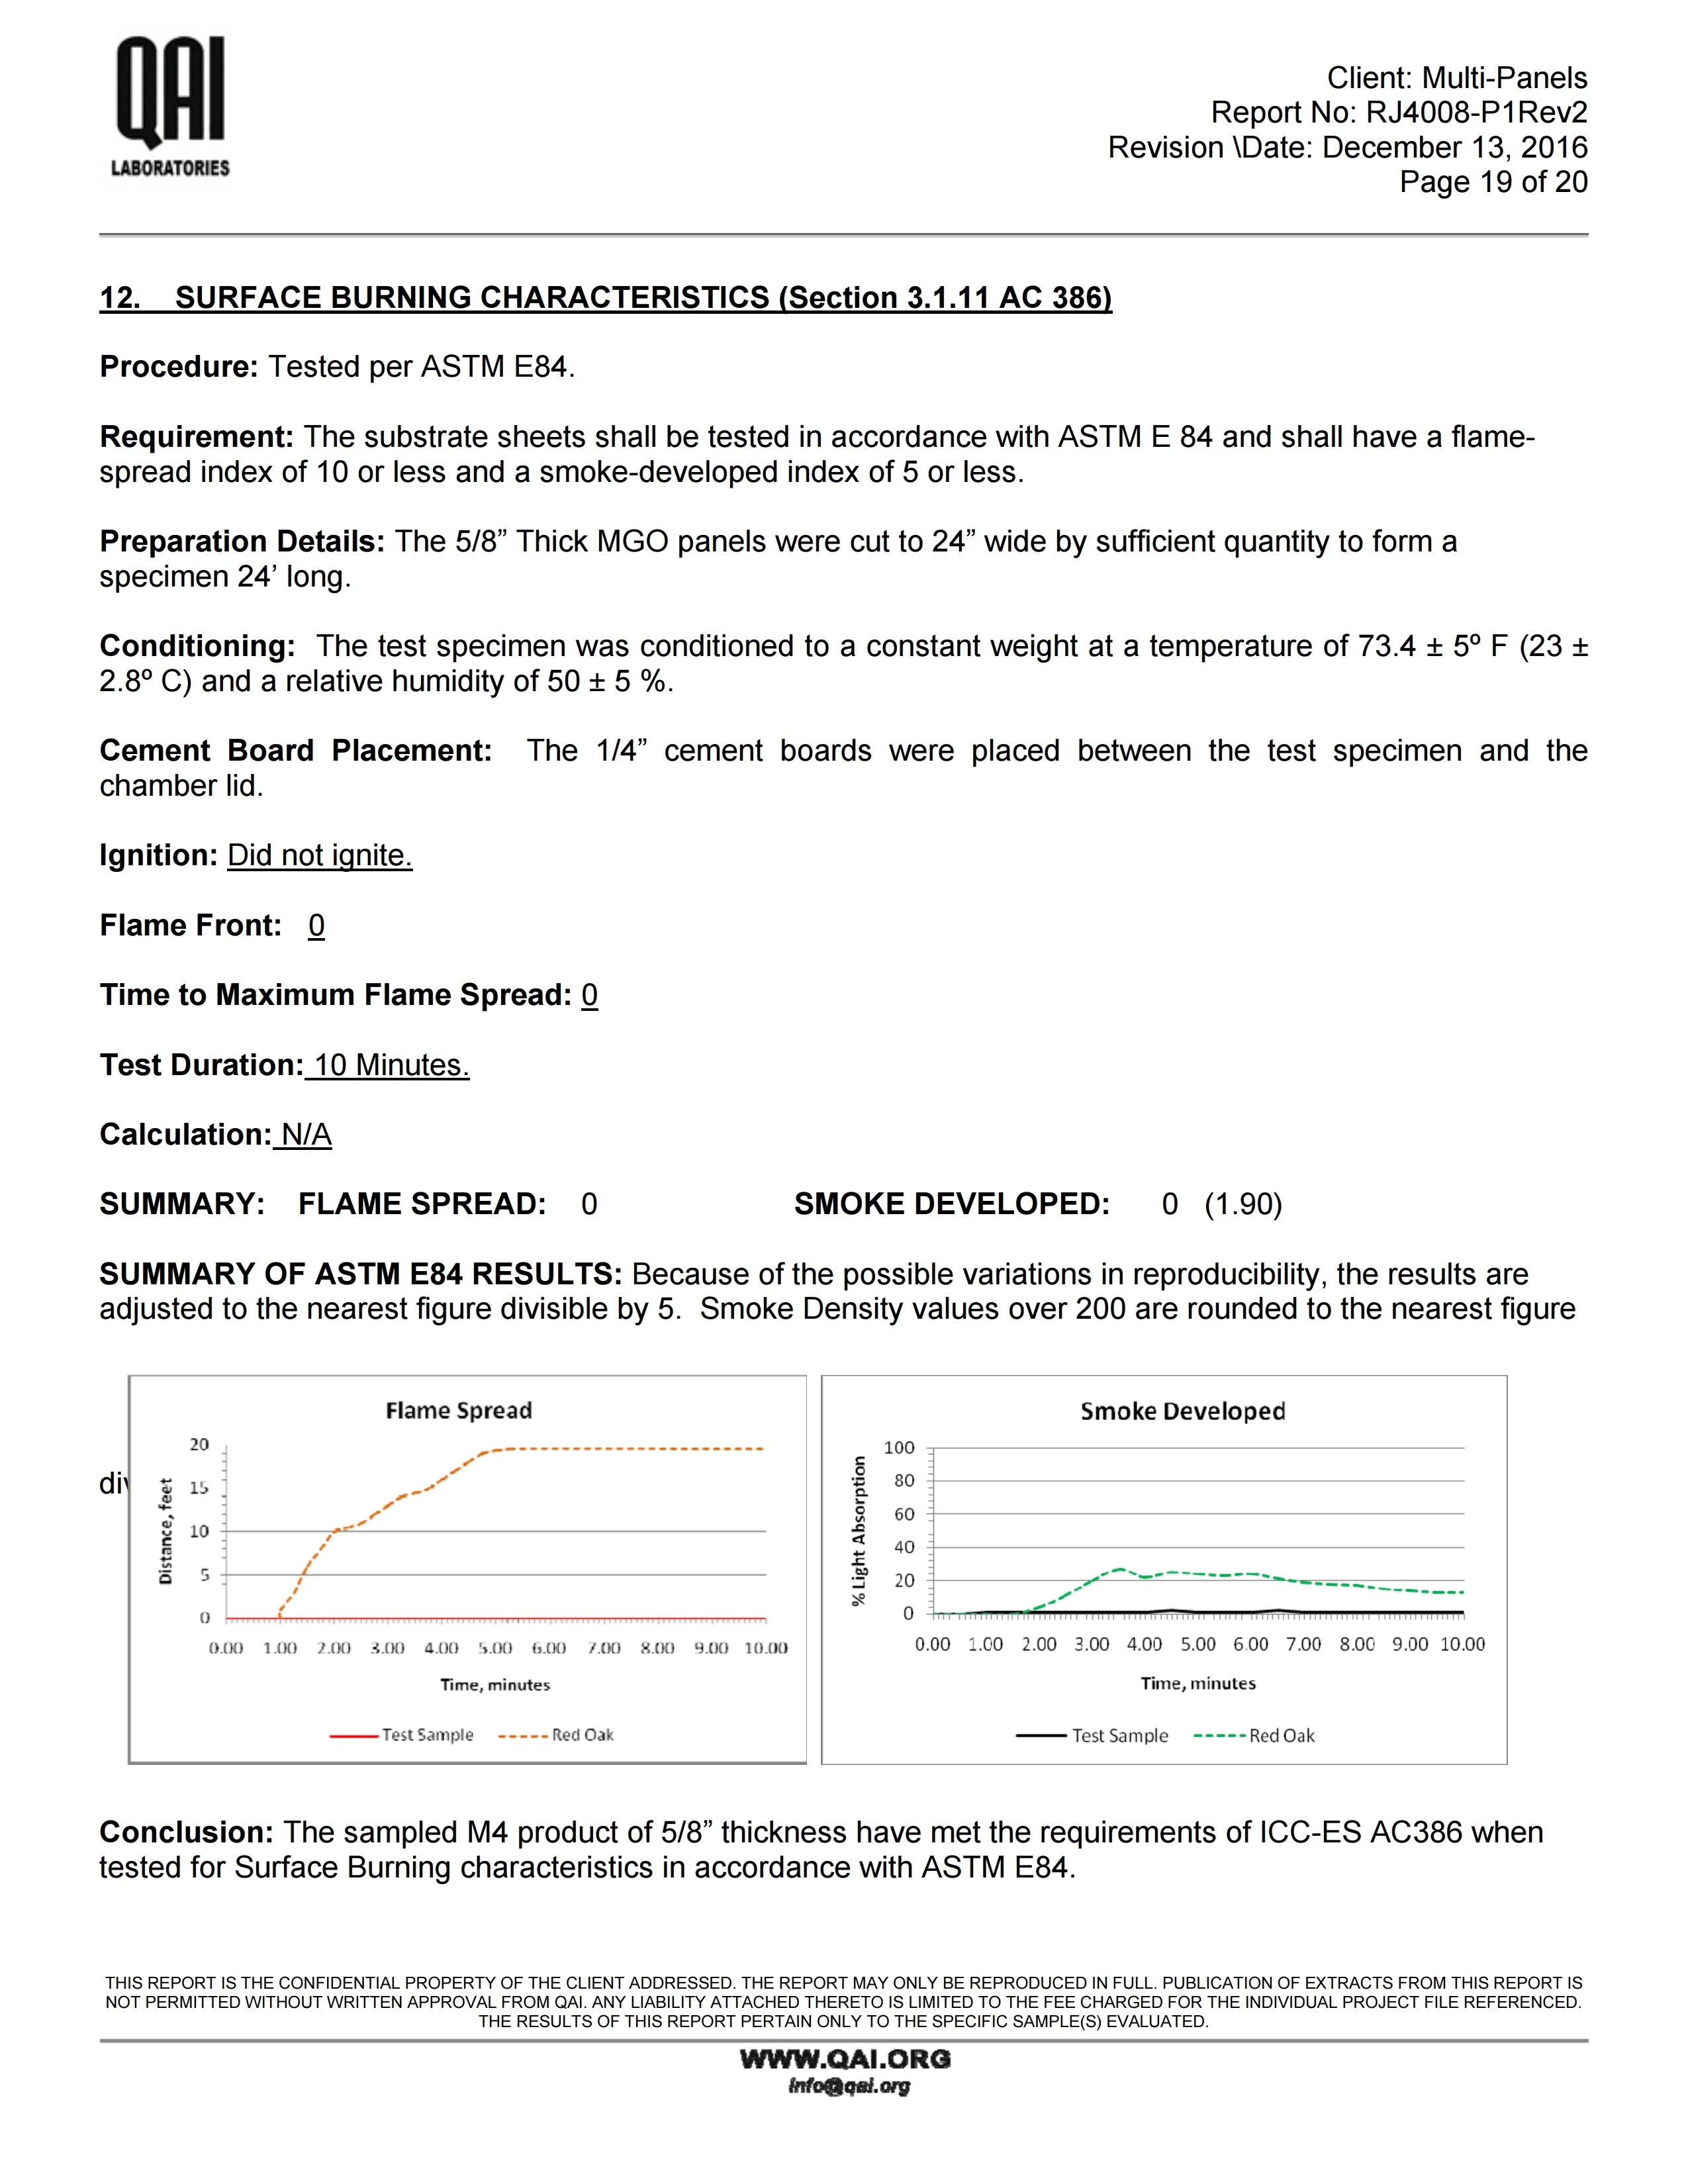 RJ4008-P1REV2-Multi-Panels-M4-AC386 Report-13122016 (2).pdf_page_19.jpg